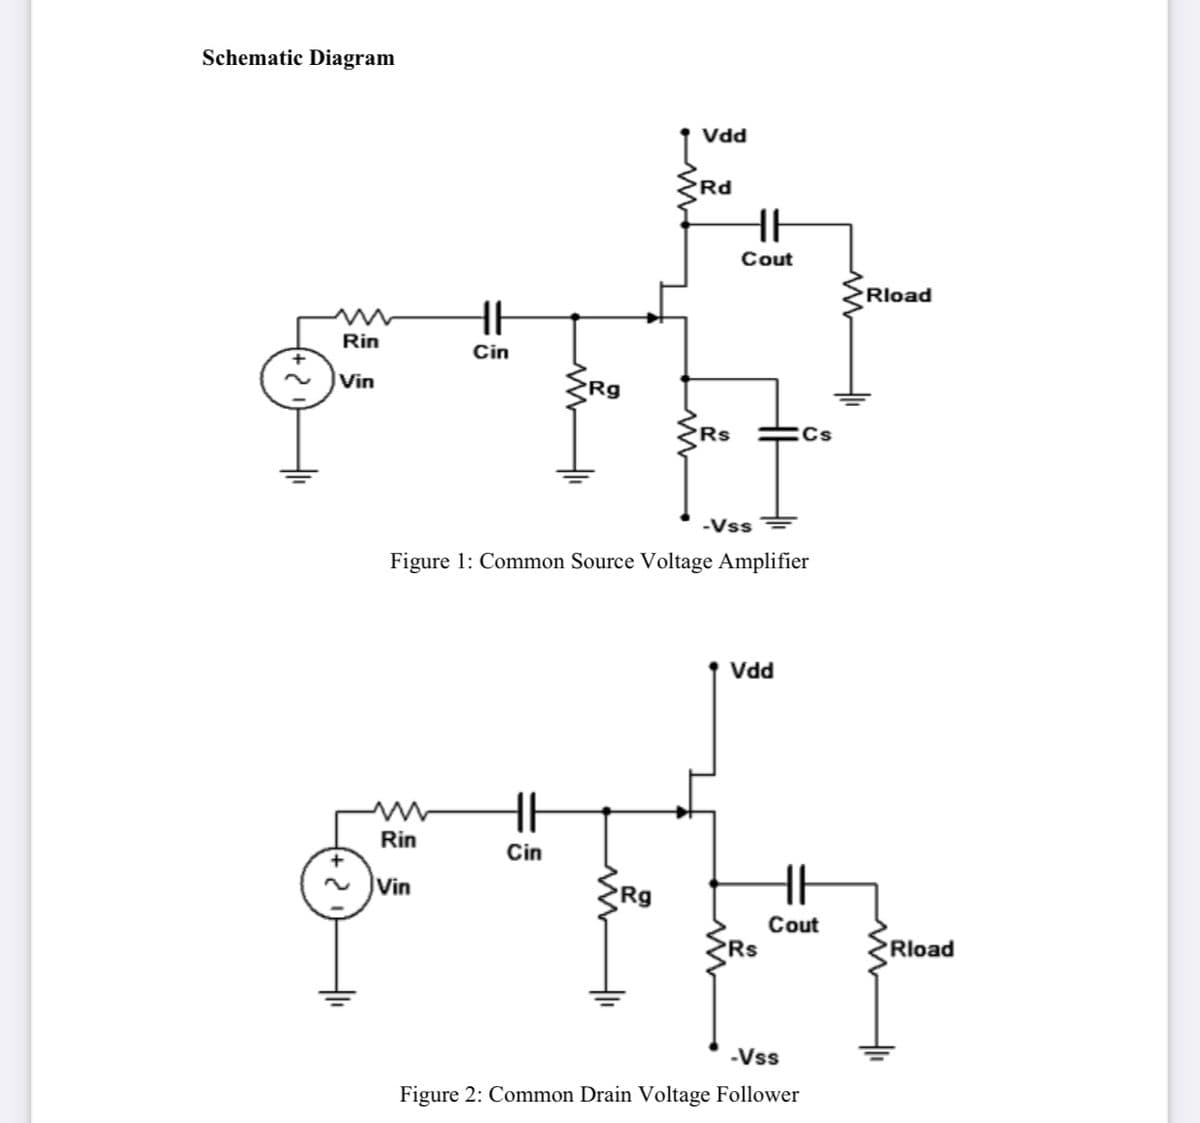 Schematic Diagram
Rin
Vin
Rin
HH
Cin
Vin
Rg
HH
Cin
Vdd
Rd
Rs
H
Cout
Figure 1: Common Source Voltage Amplifier
-Vss
Vdd
Rs
Cs
HH
Cout
-Vss
Figure 2: Common Drain Voltage Follower
Rload
Rload